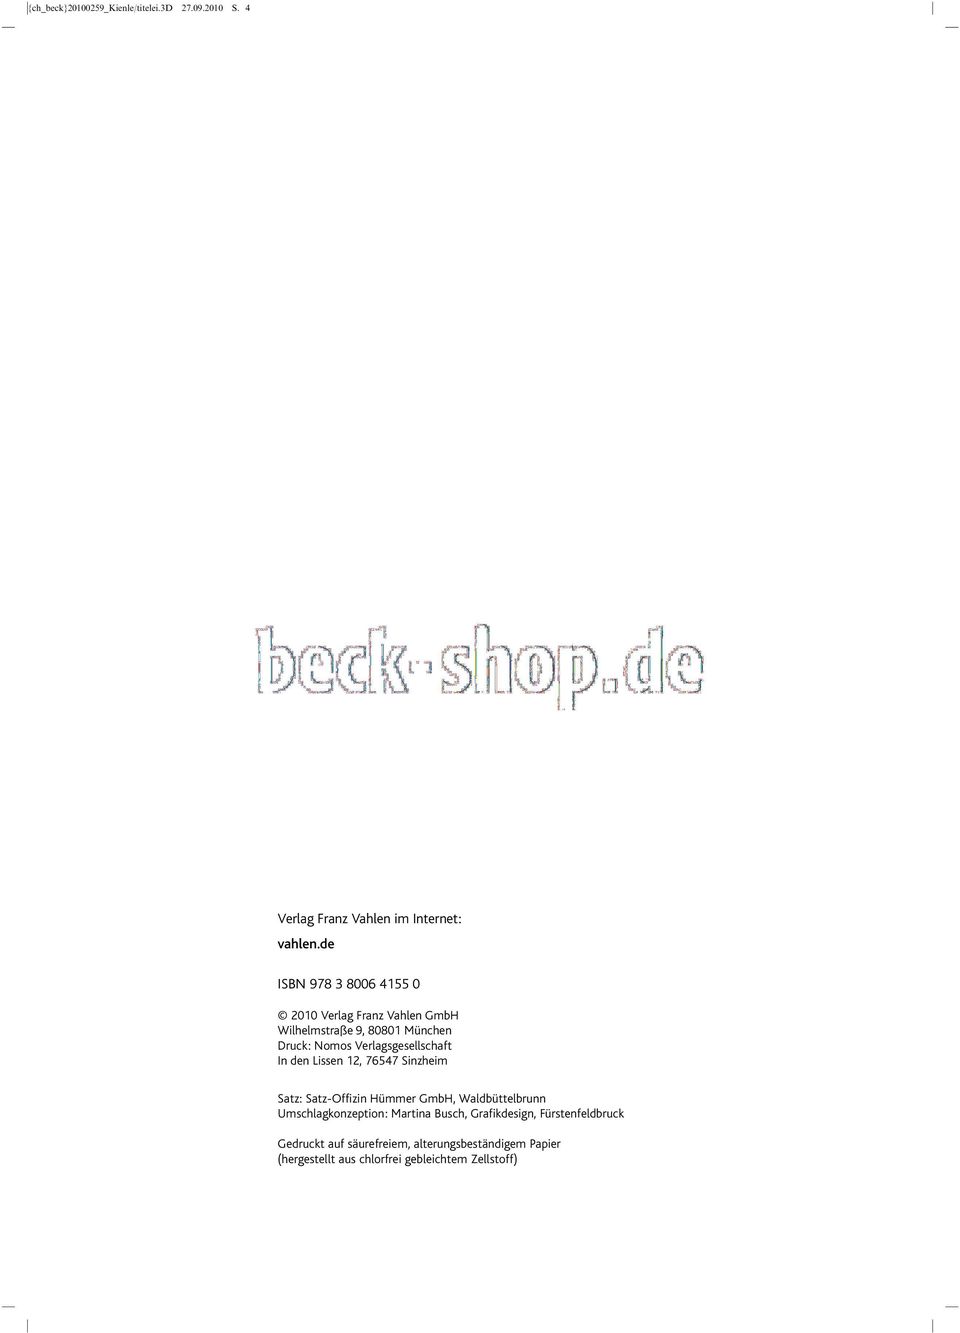 Verlagsgesellschaft In den Lissen 12, 76547 Sinzheim Satz: Satz-Offizin Hümmer GmbH, Waldbüttelbrunn